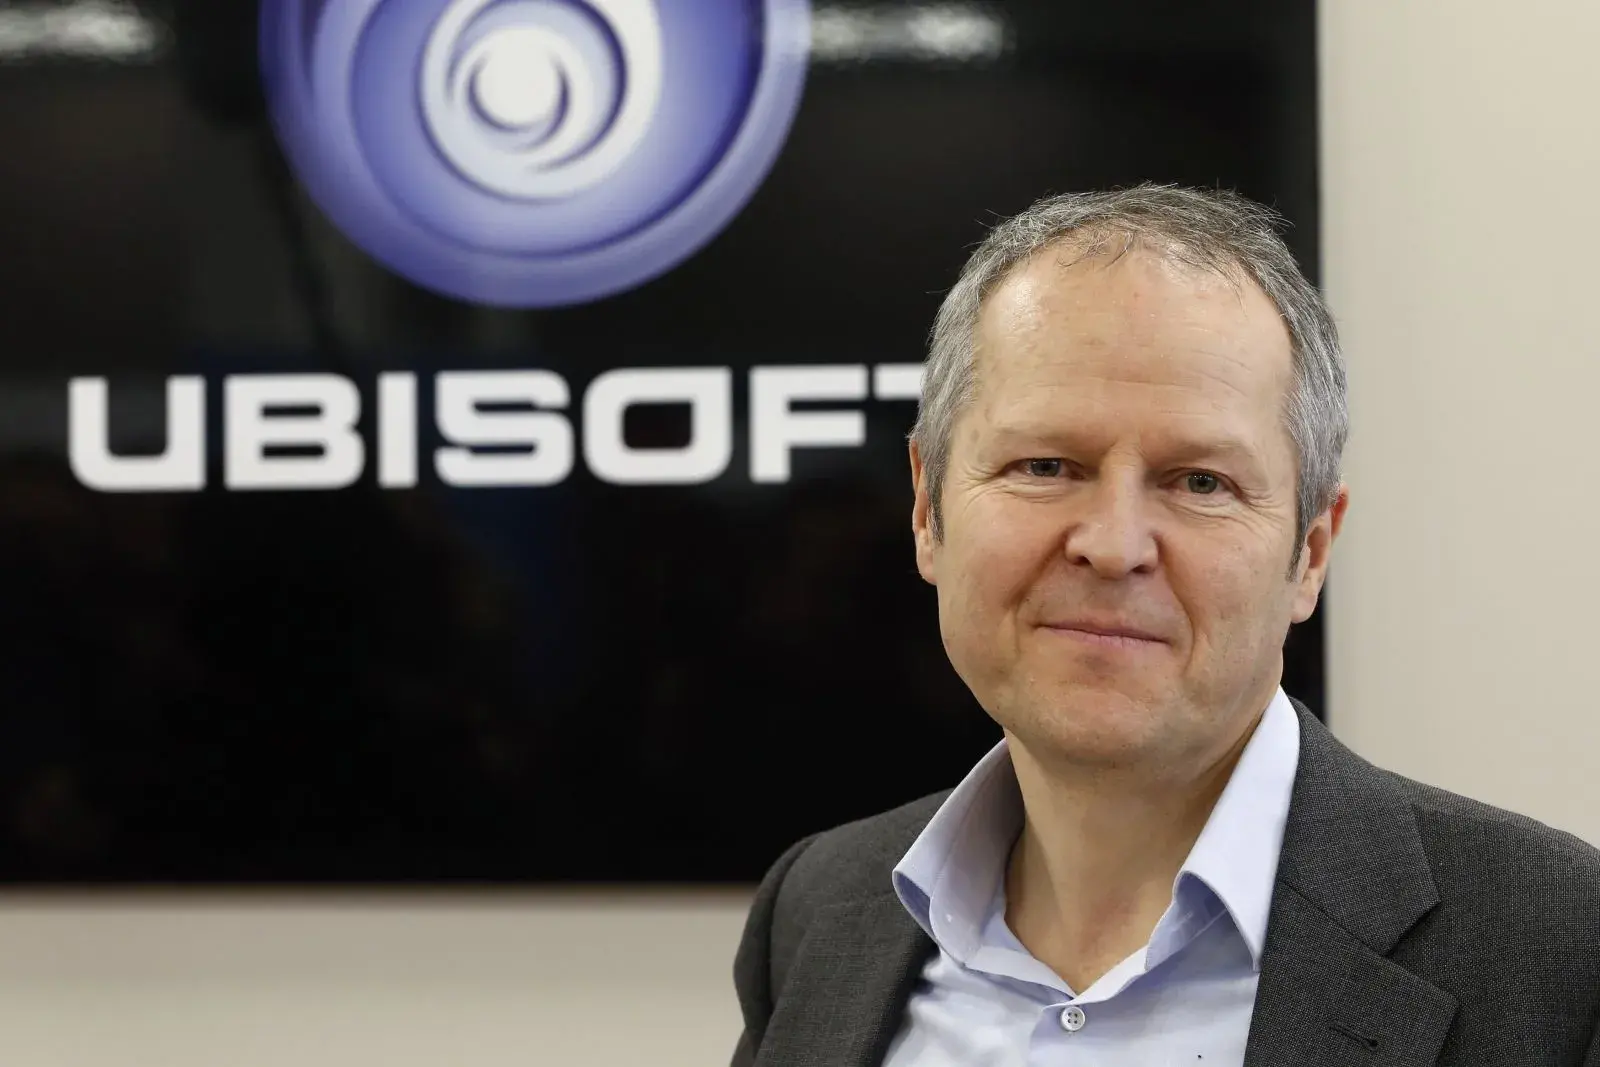 Ubisoft CEO